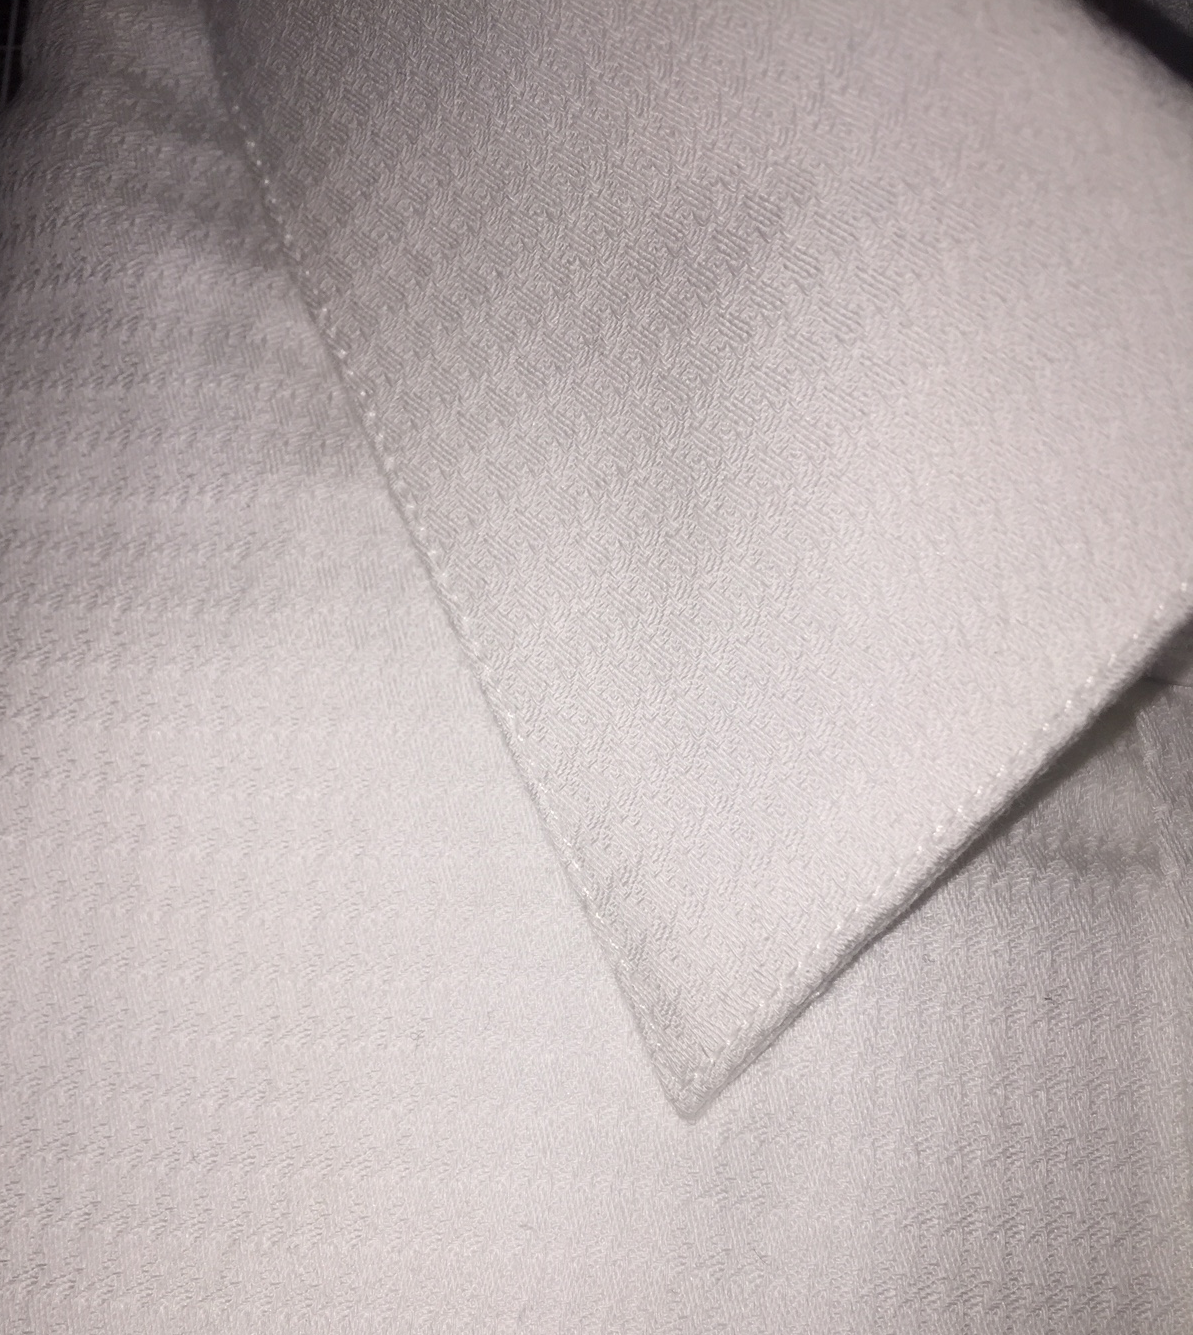 White Texture #cc3, 100% Cotton, Men's Monogrammed Custom Tailored Dress Shirt